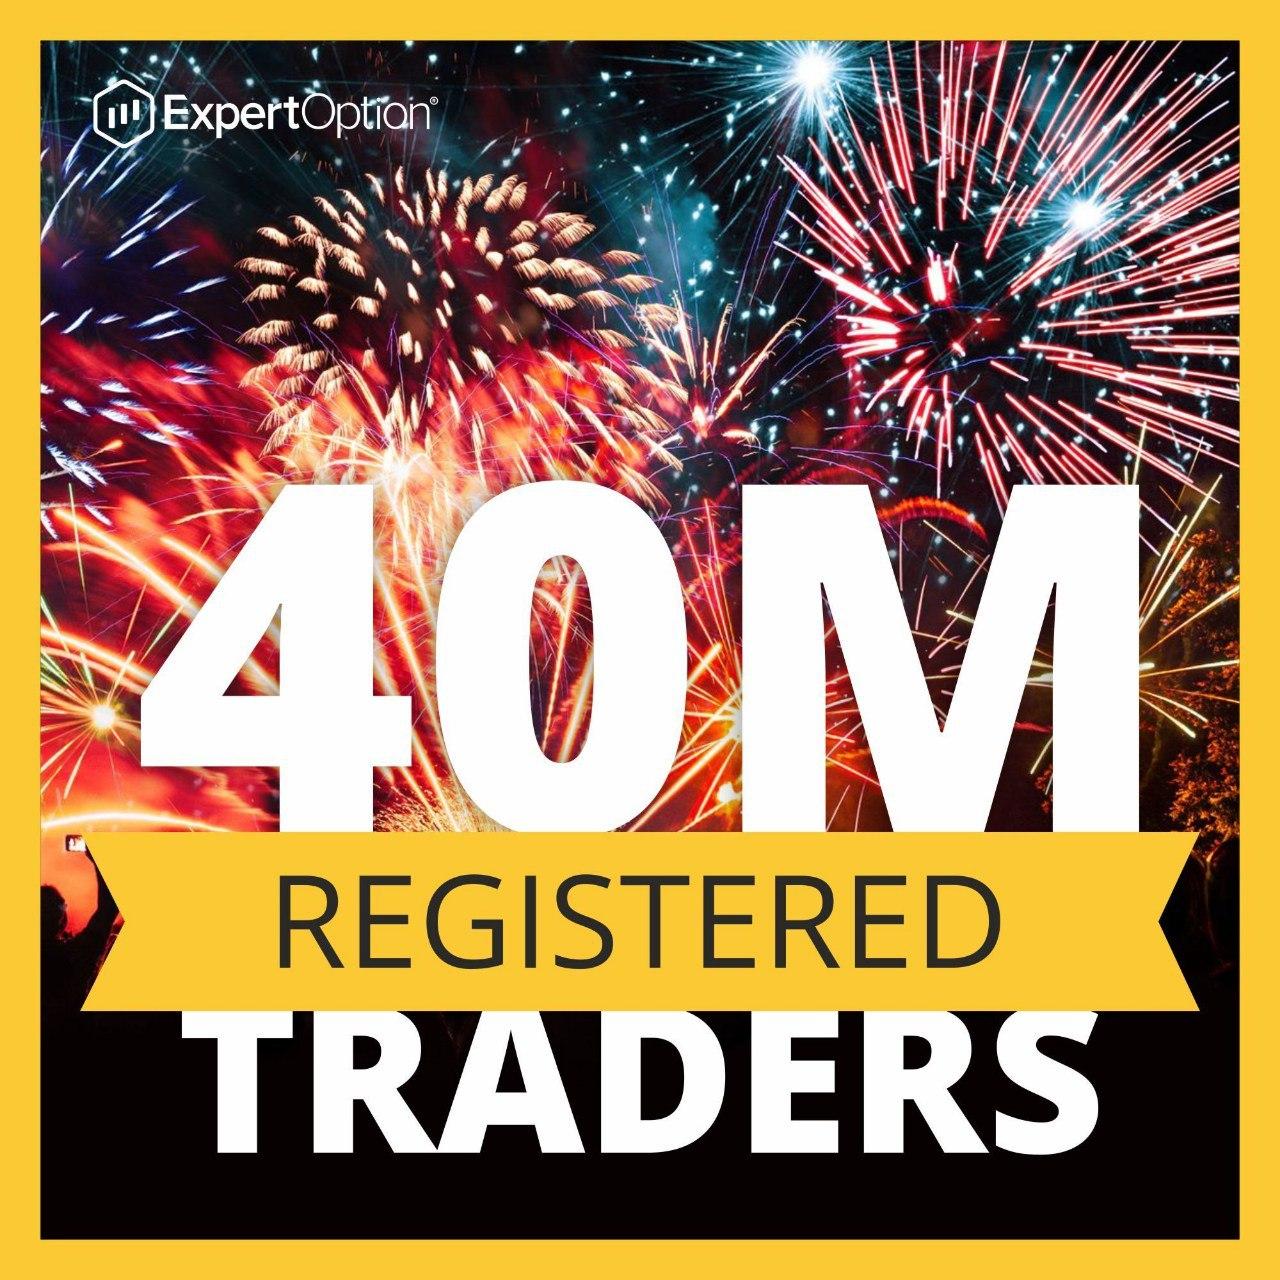 ExpertOption - 40 million traders